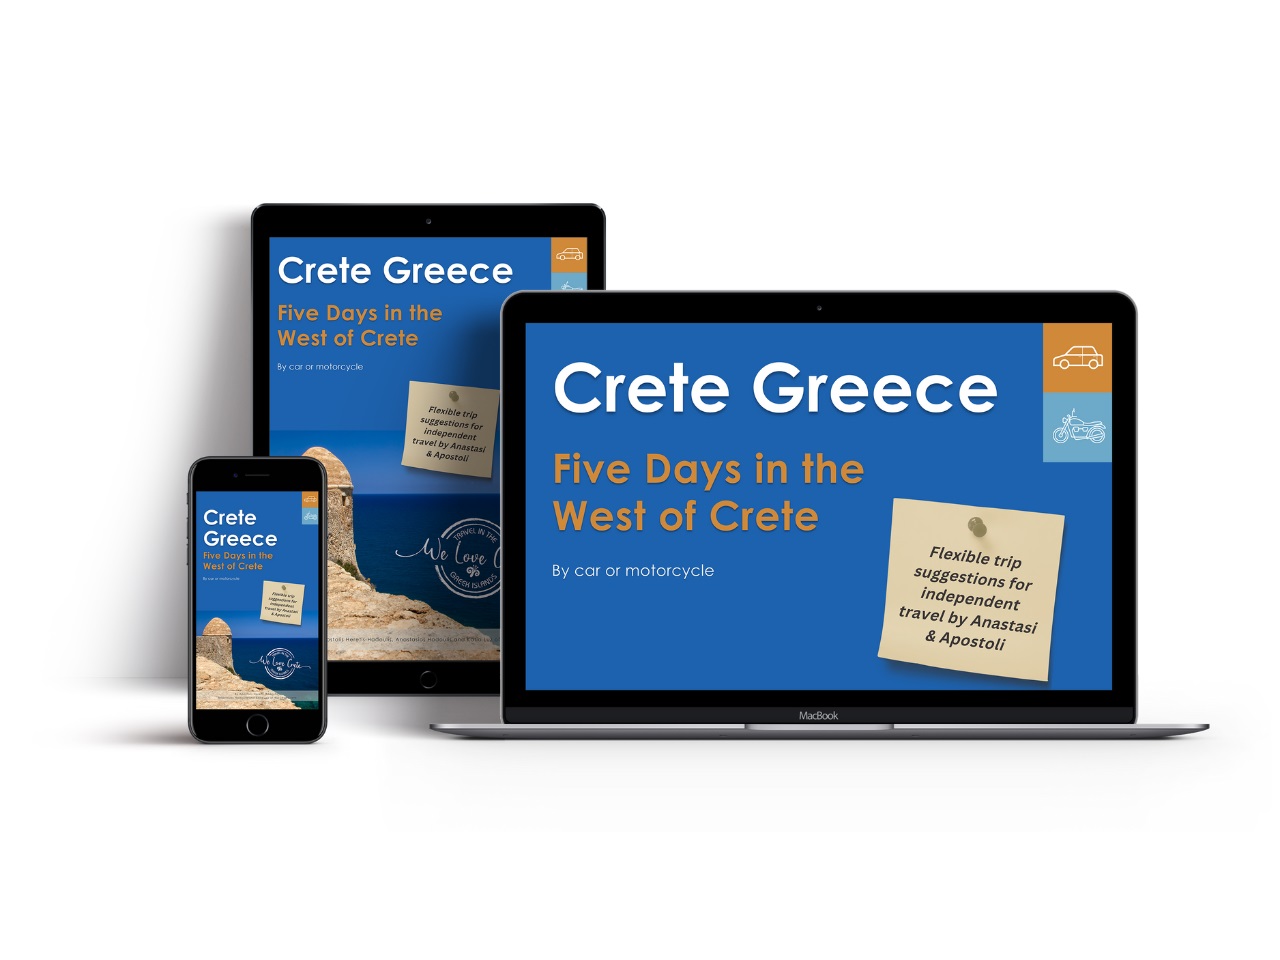 Trip ideas booklet for western Crete